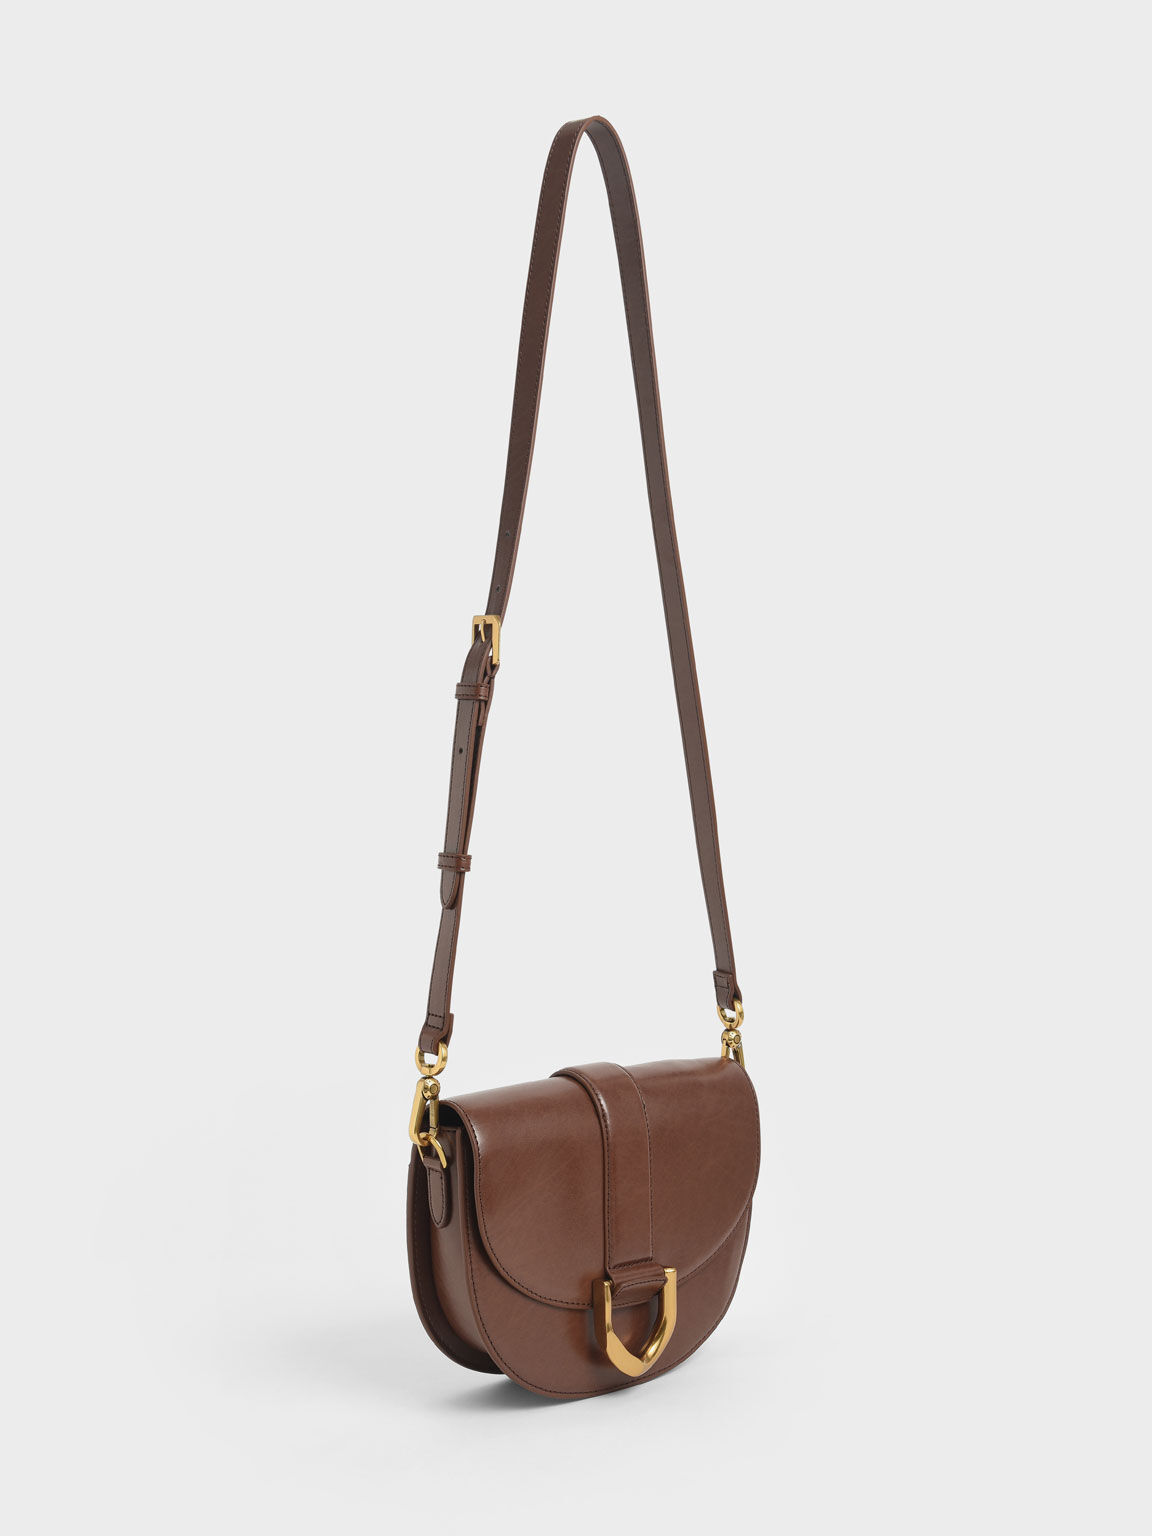 Charles & Keith - Women's Charlot Bag, Dark Brown, S